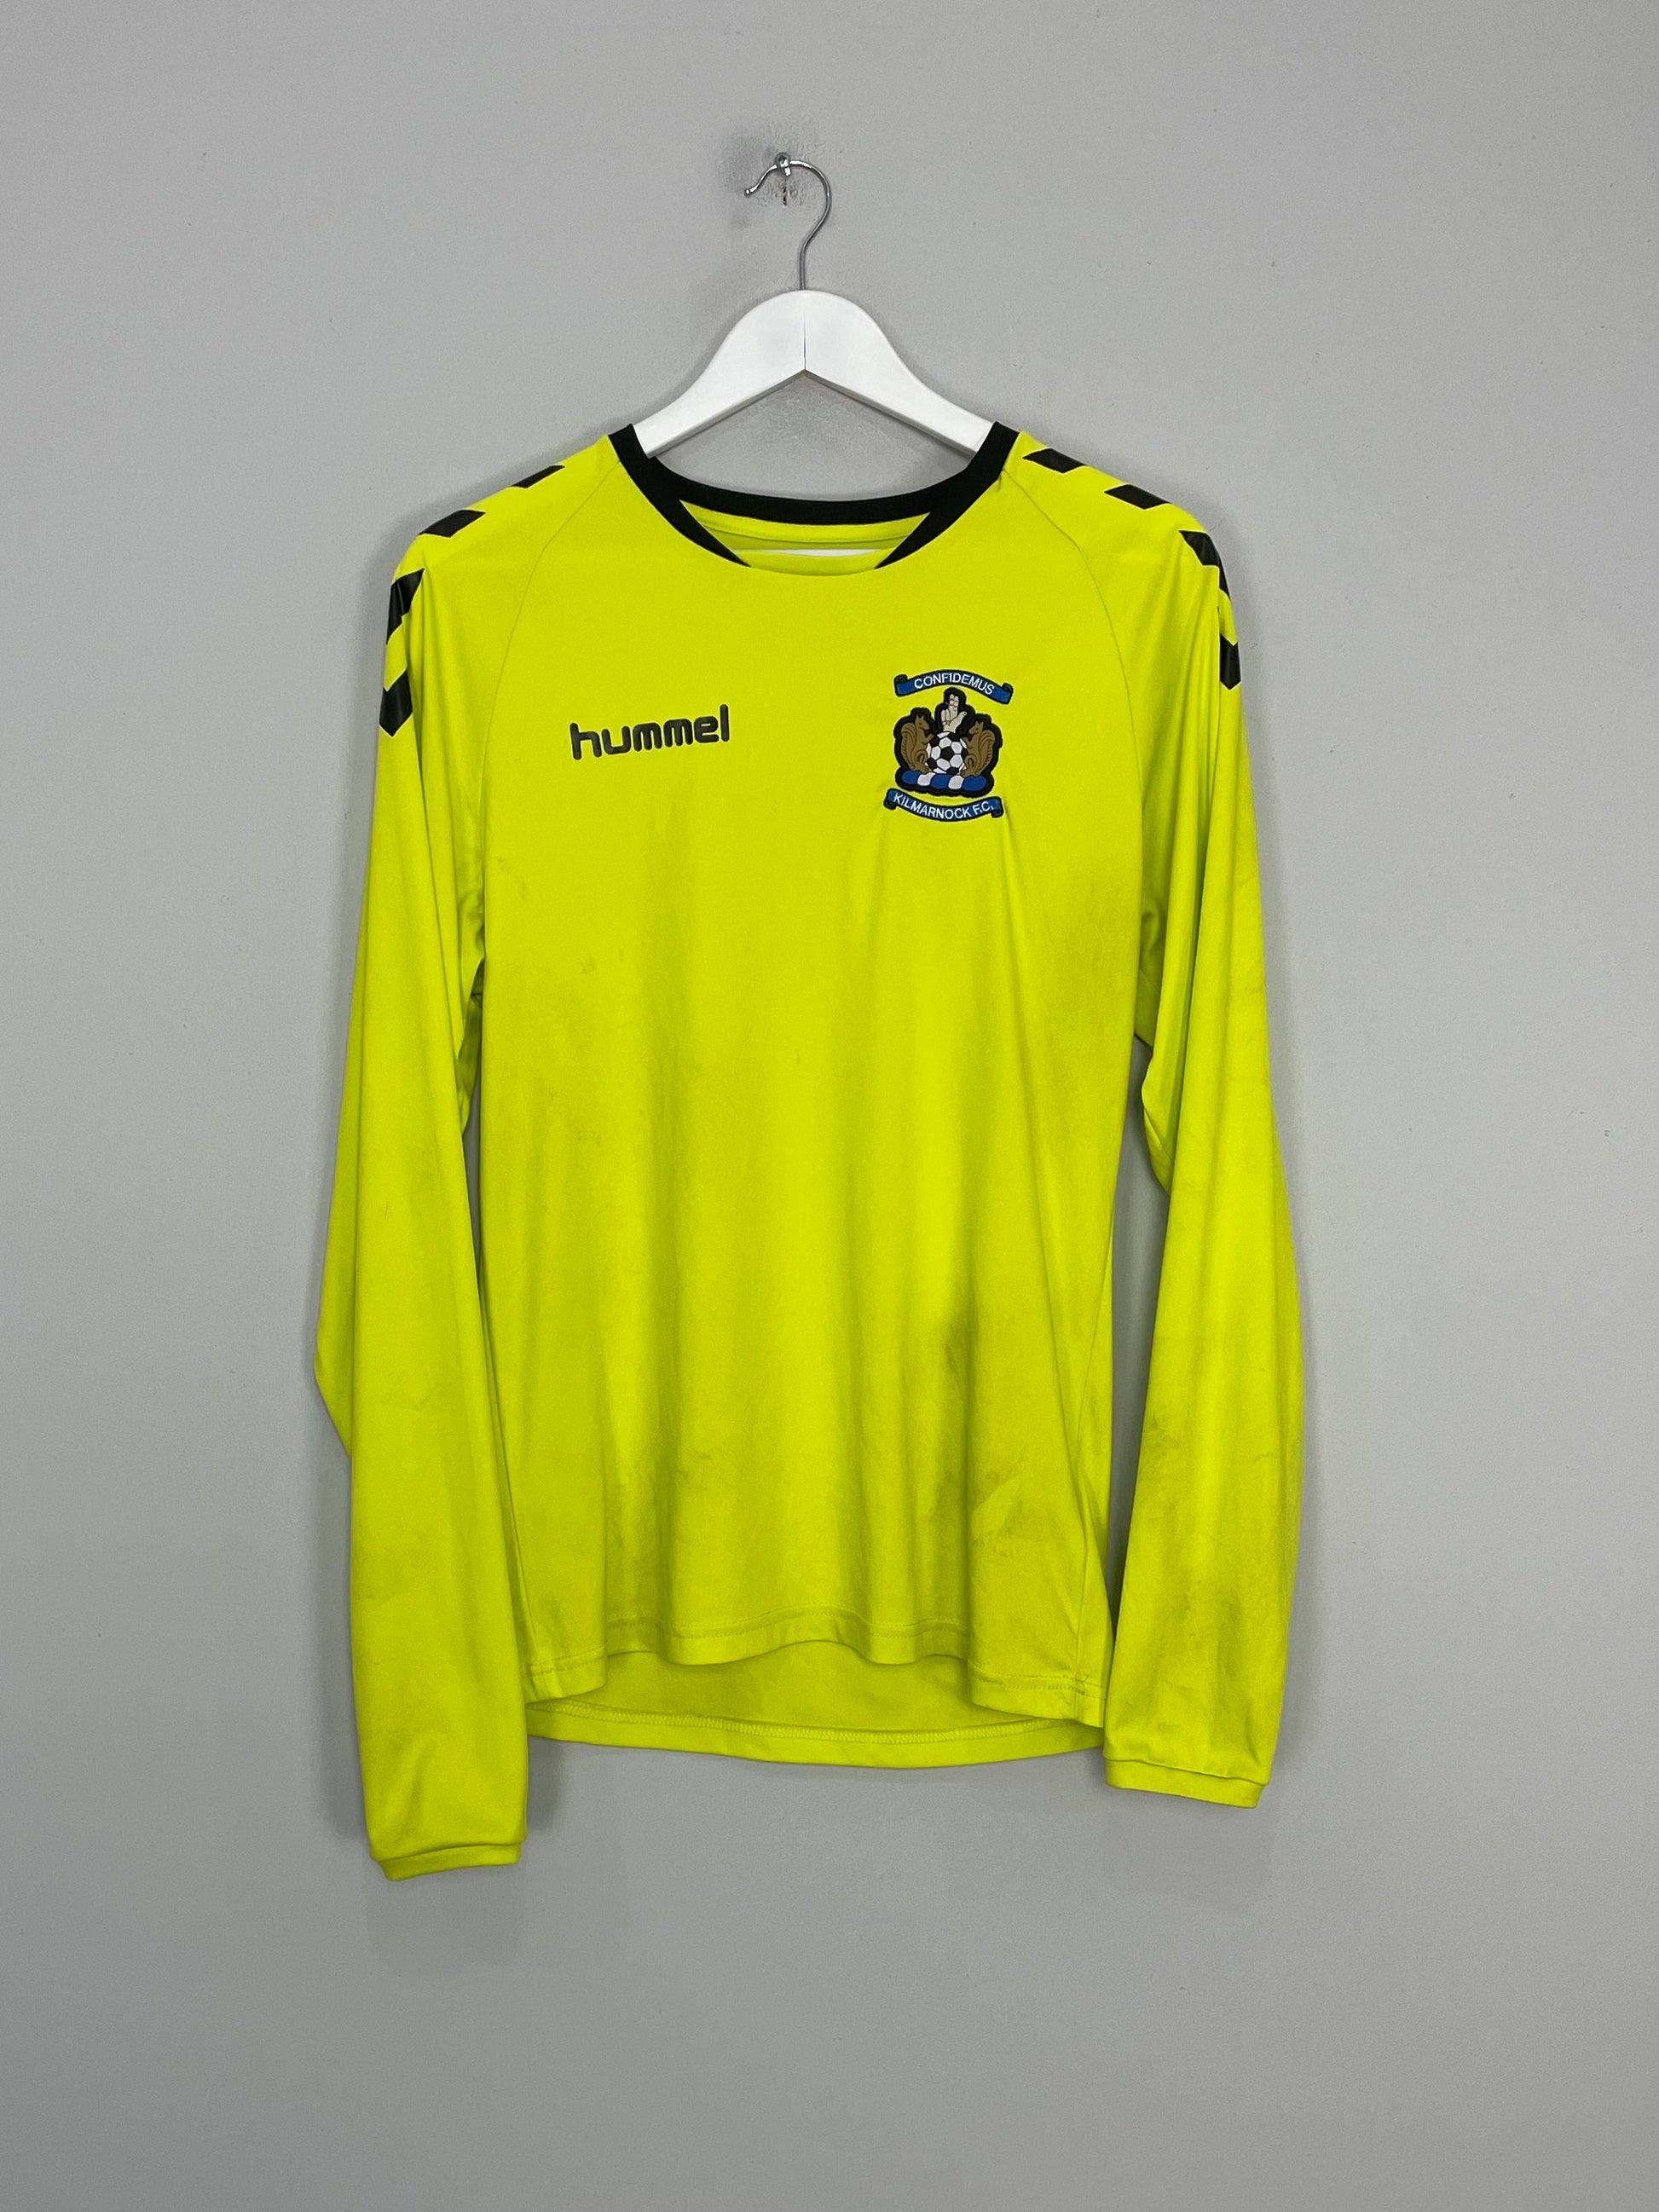 Image of the Kilmarnock shirt from the 2019/20 season